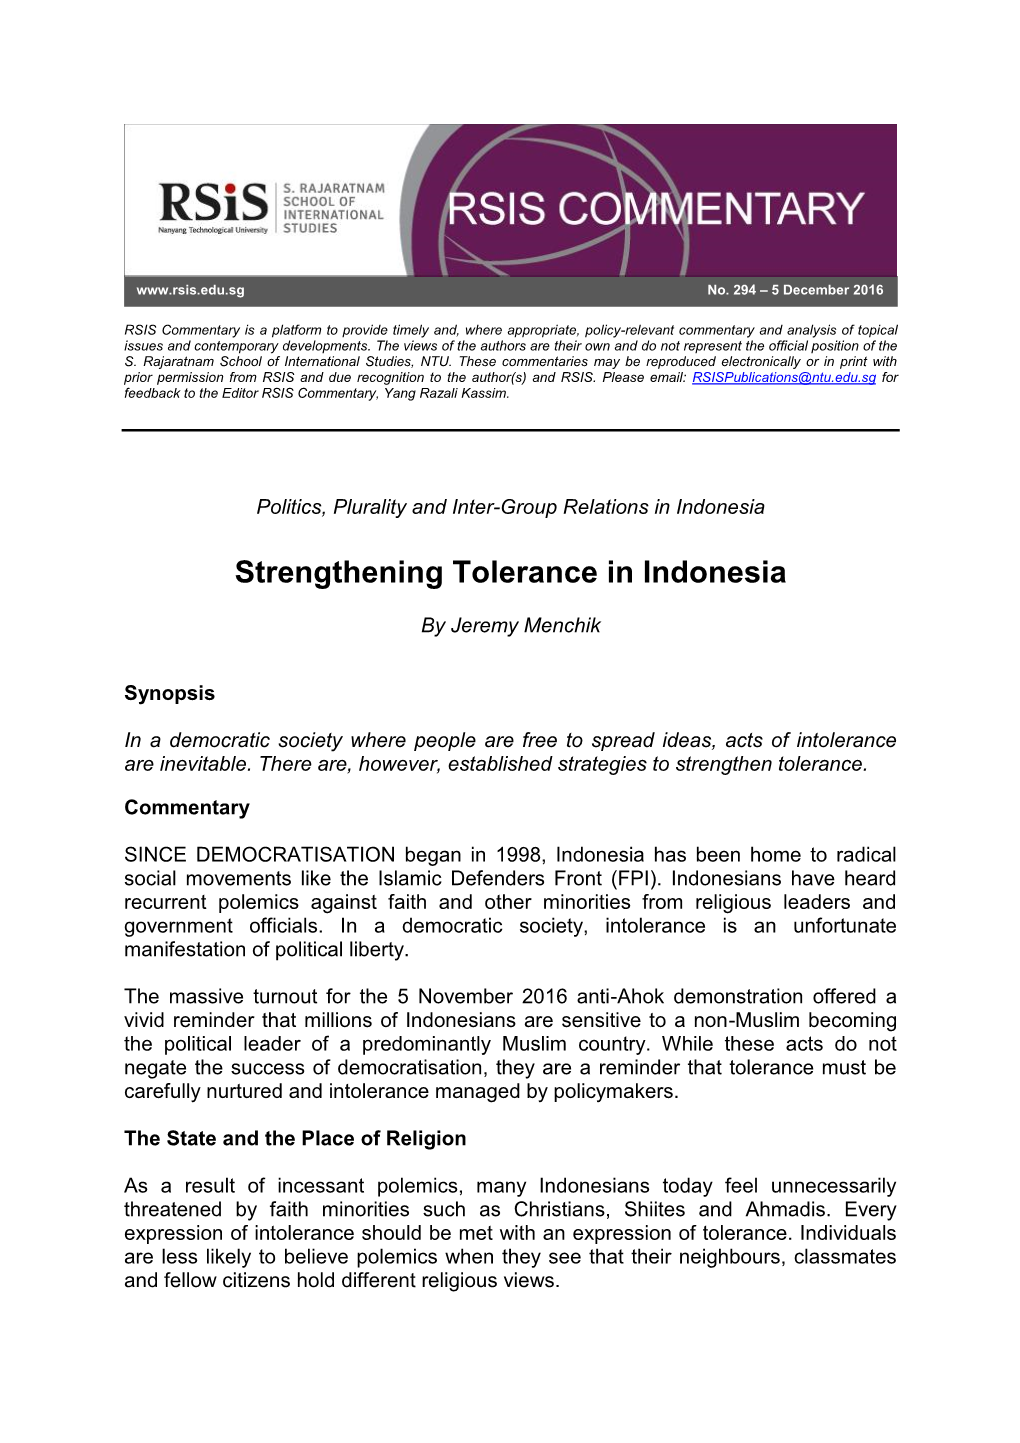 Strengthening Tolerance in Indonesia